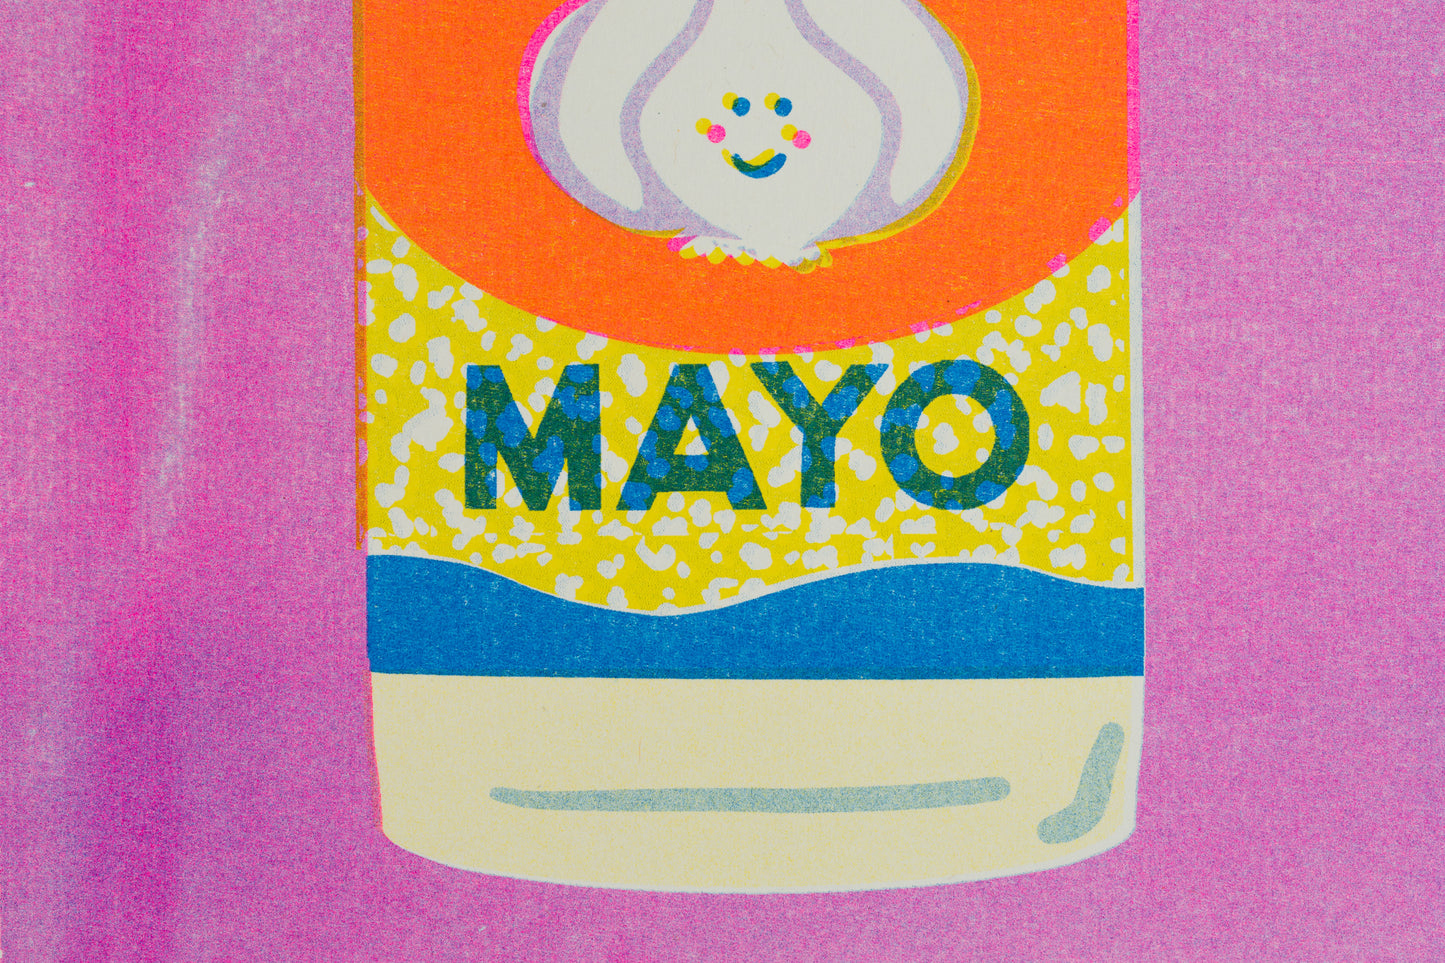 Garlic Mayo Print